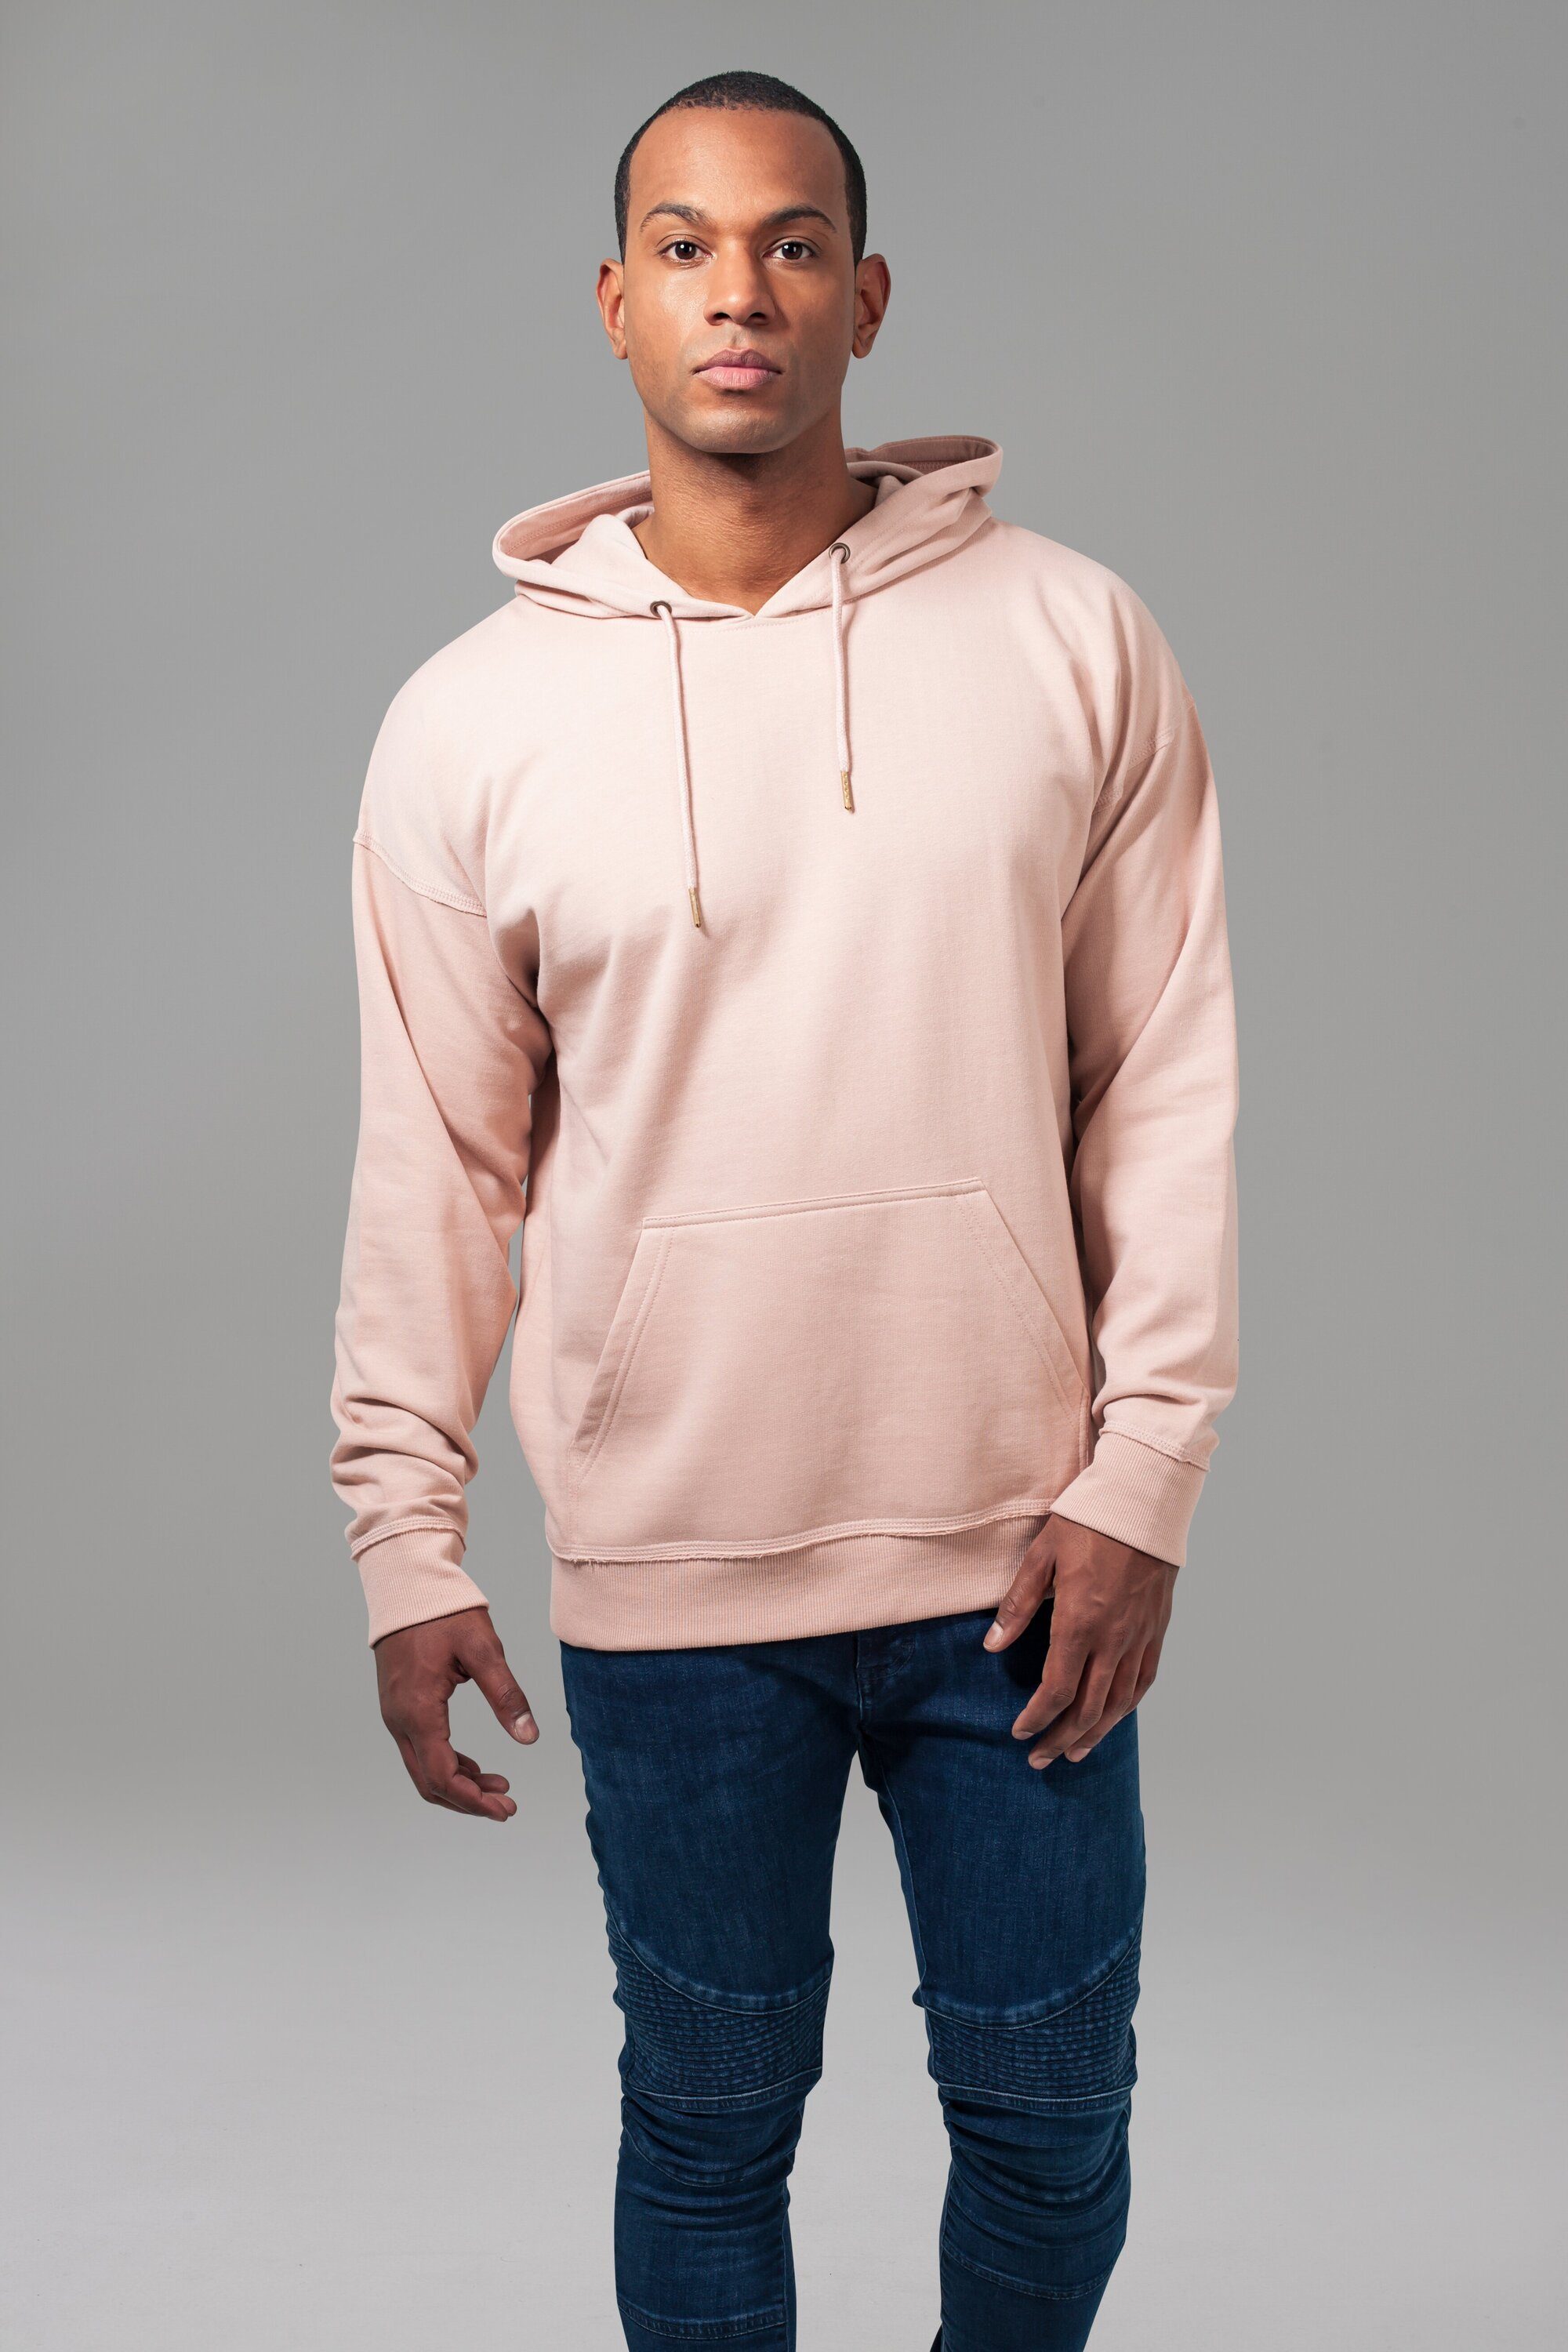 Rosa Herren-Pullover kaufen » Pinker Pullover Herren-| OTTO